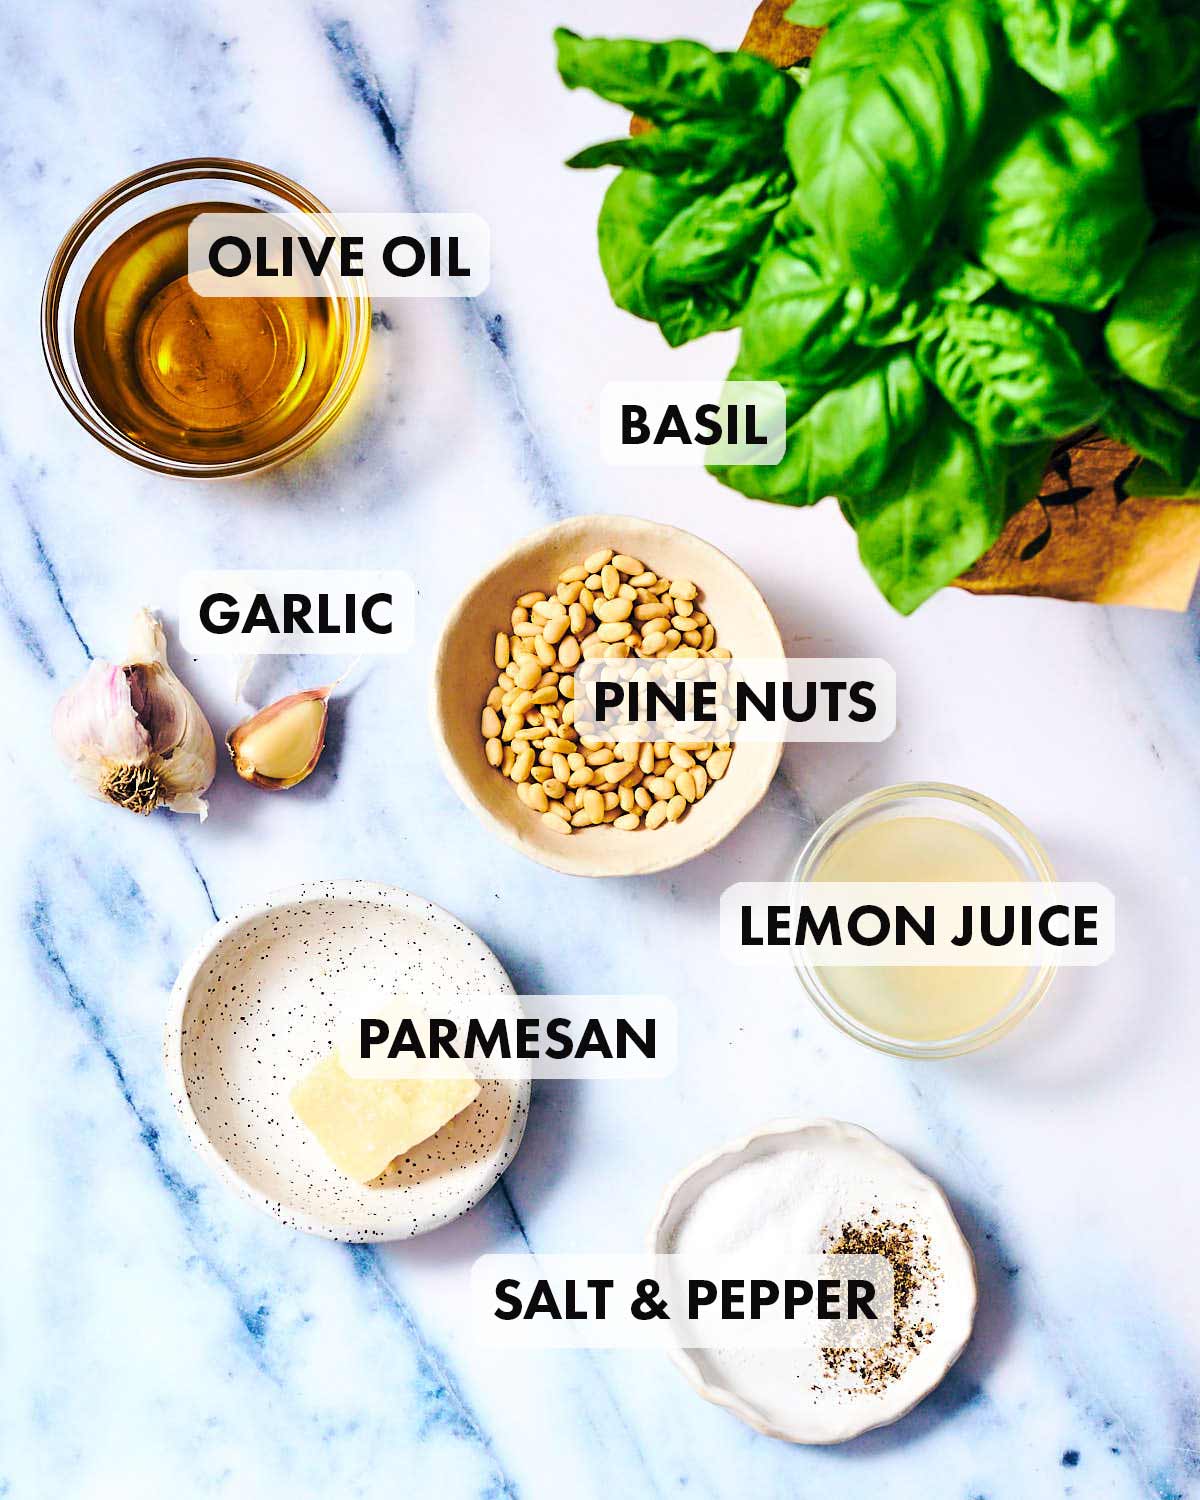 Ingredients to make the best homemade salad pesto dressing.